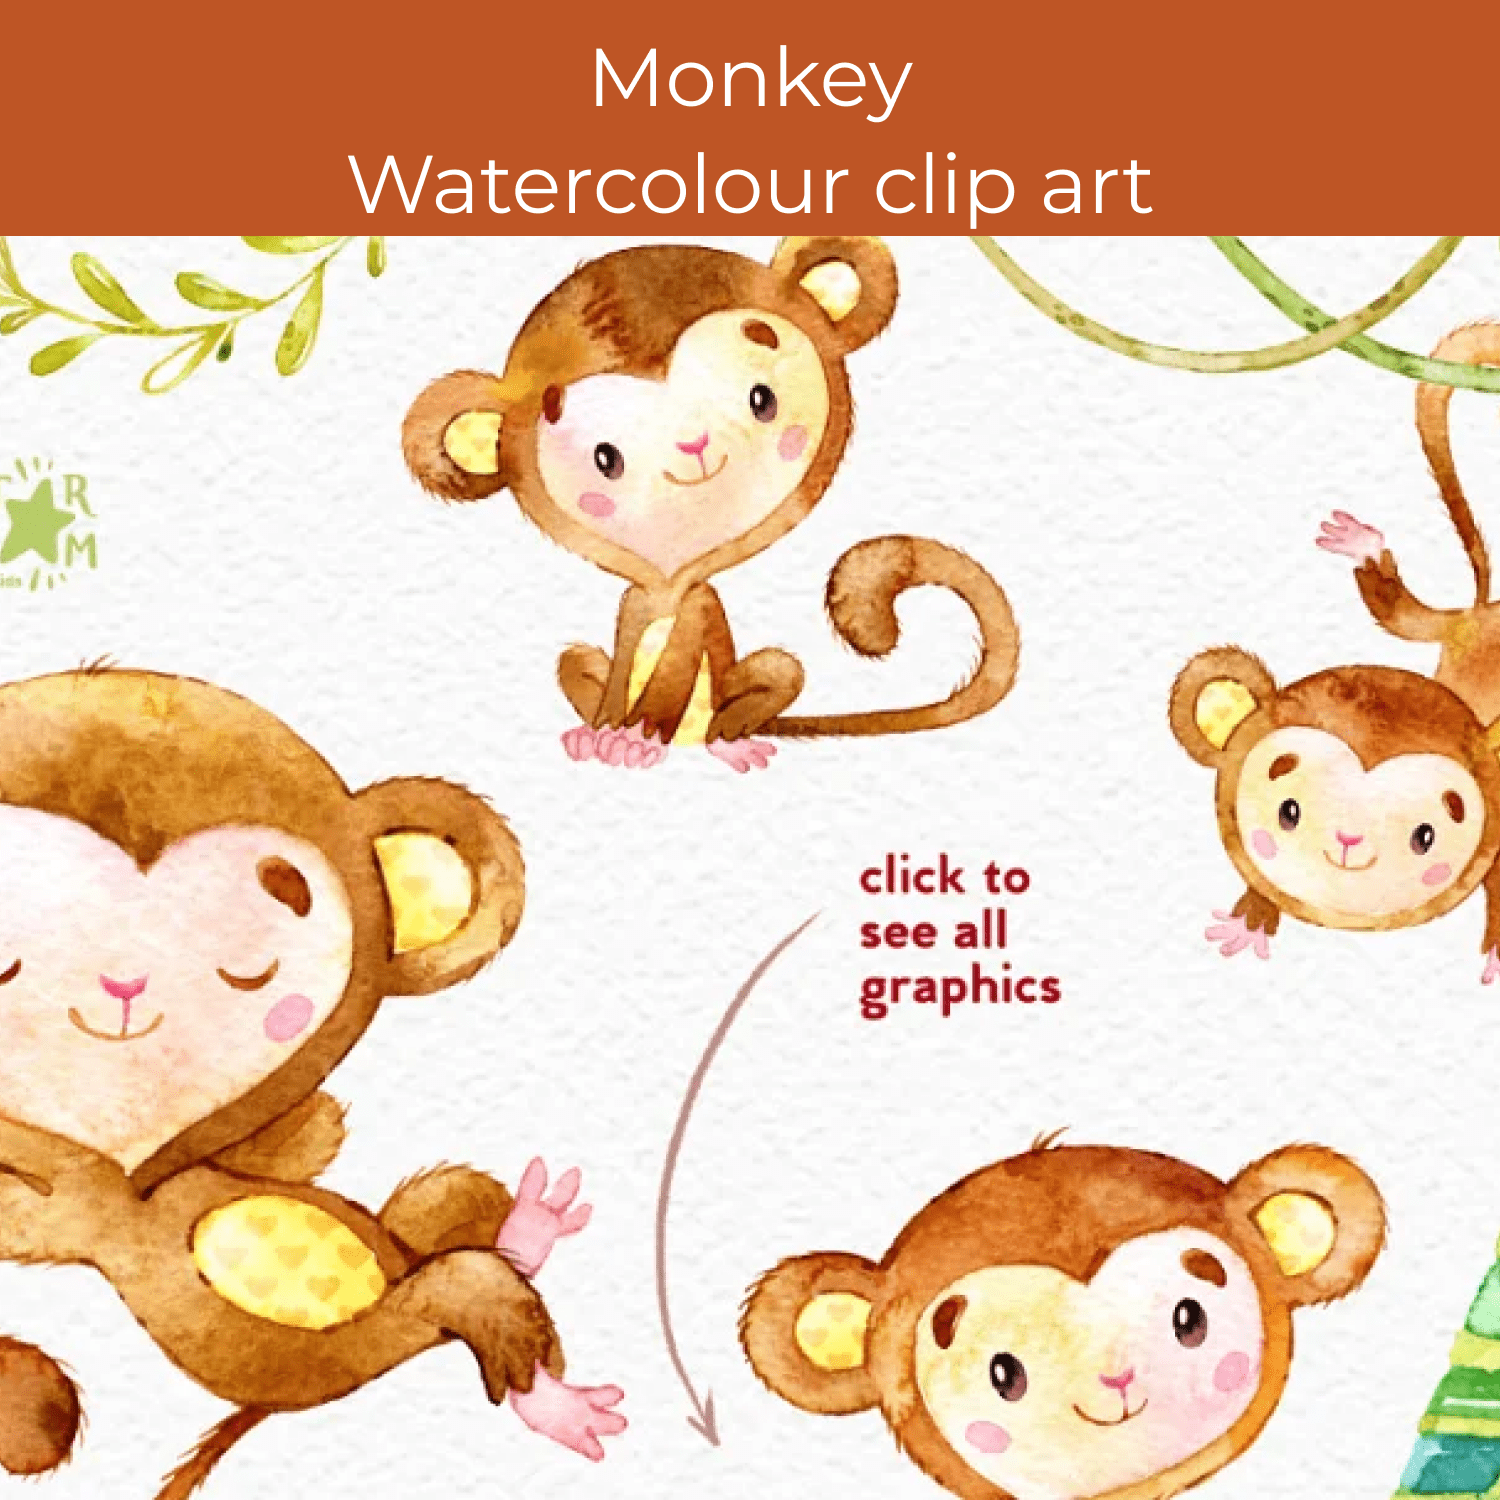 Monkey. Watercolour clip art. cover.